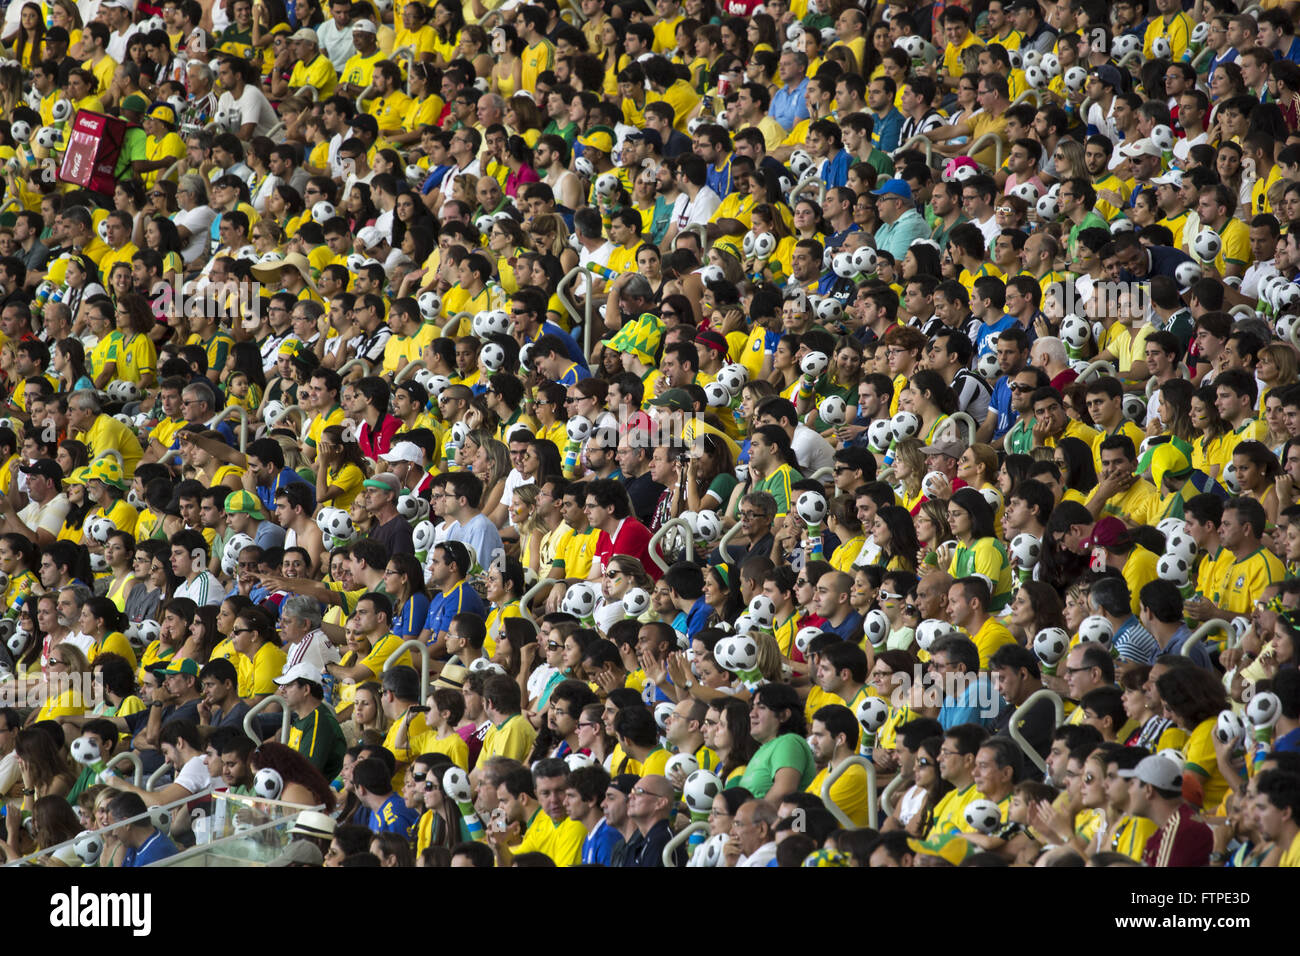 La tribuna repleta de fanáticos del fútbol brasileño Foto de stock